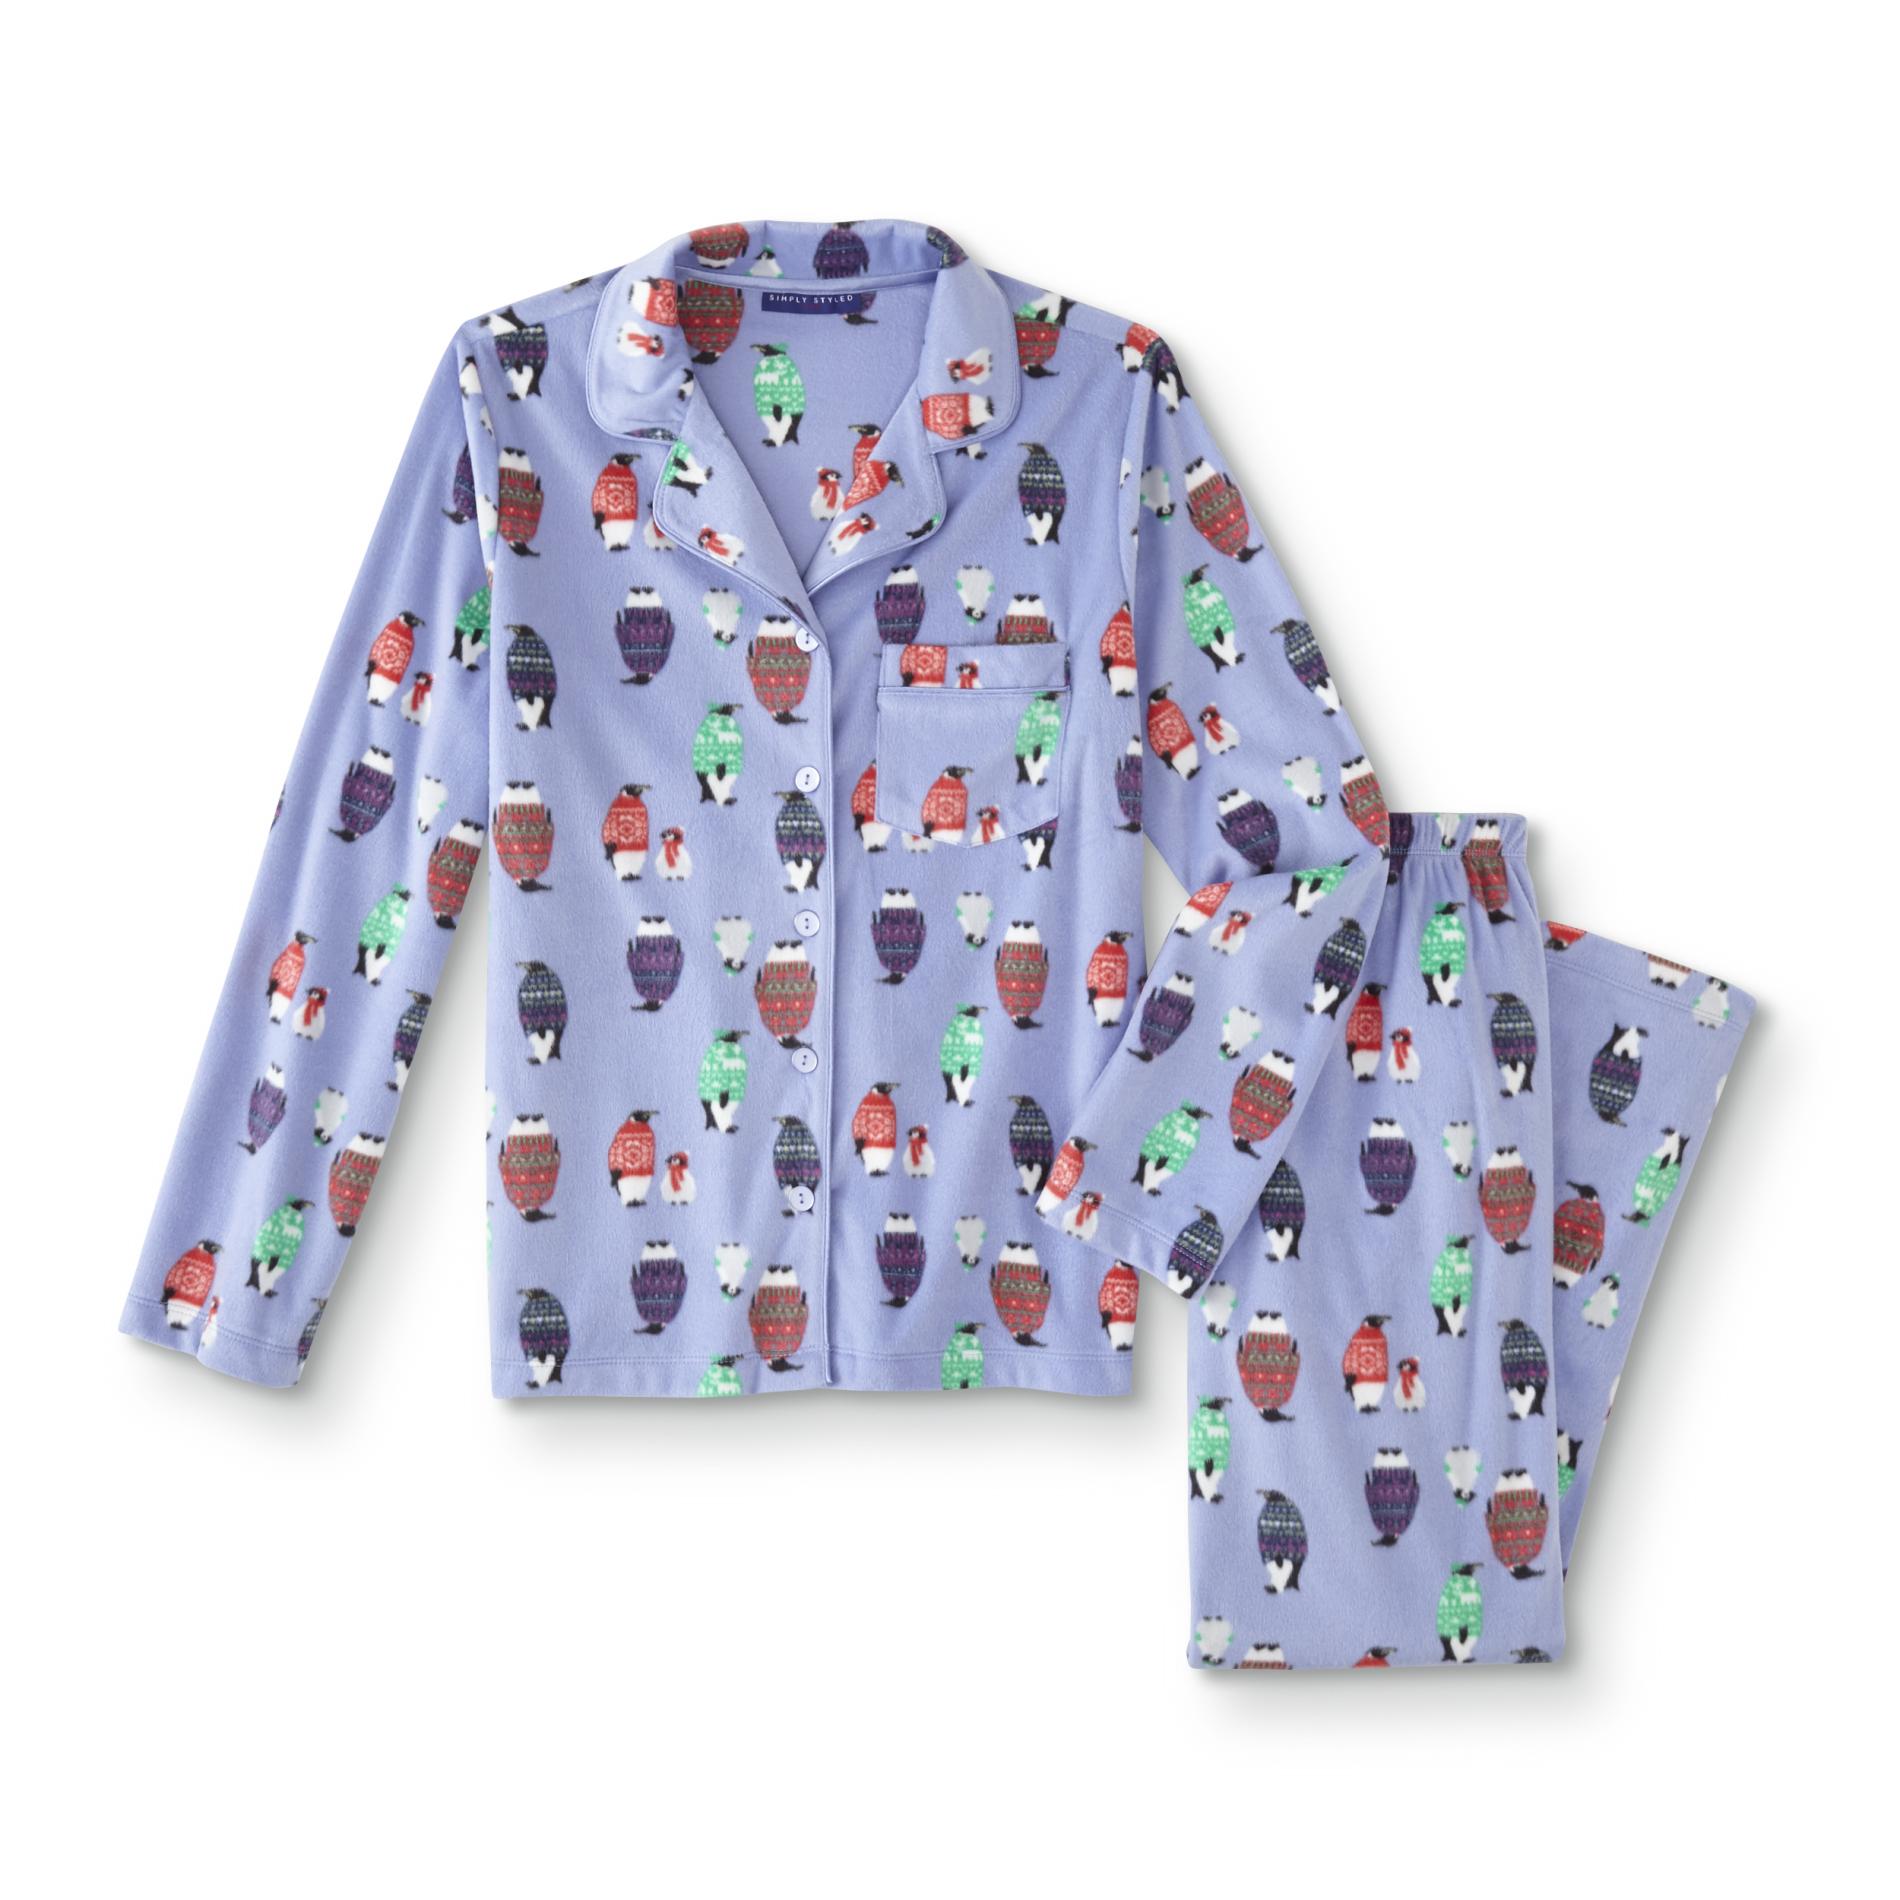 Simply Styled Women's Pajama Shirt & Pants - Penguins